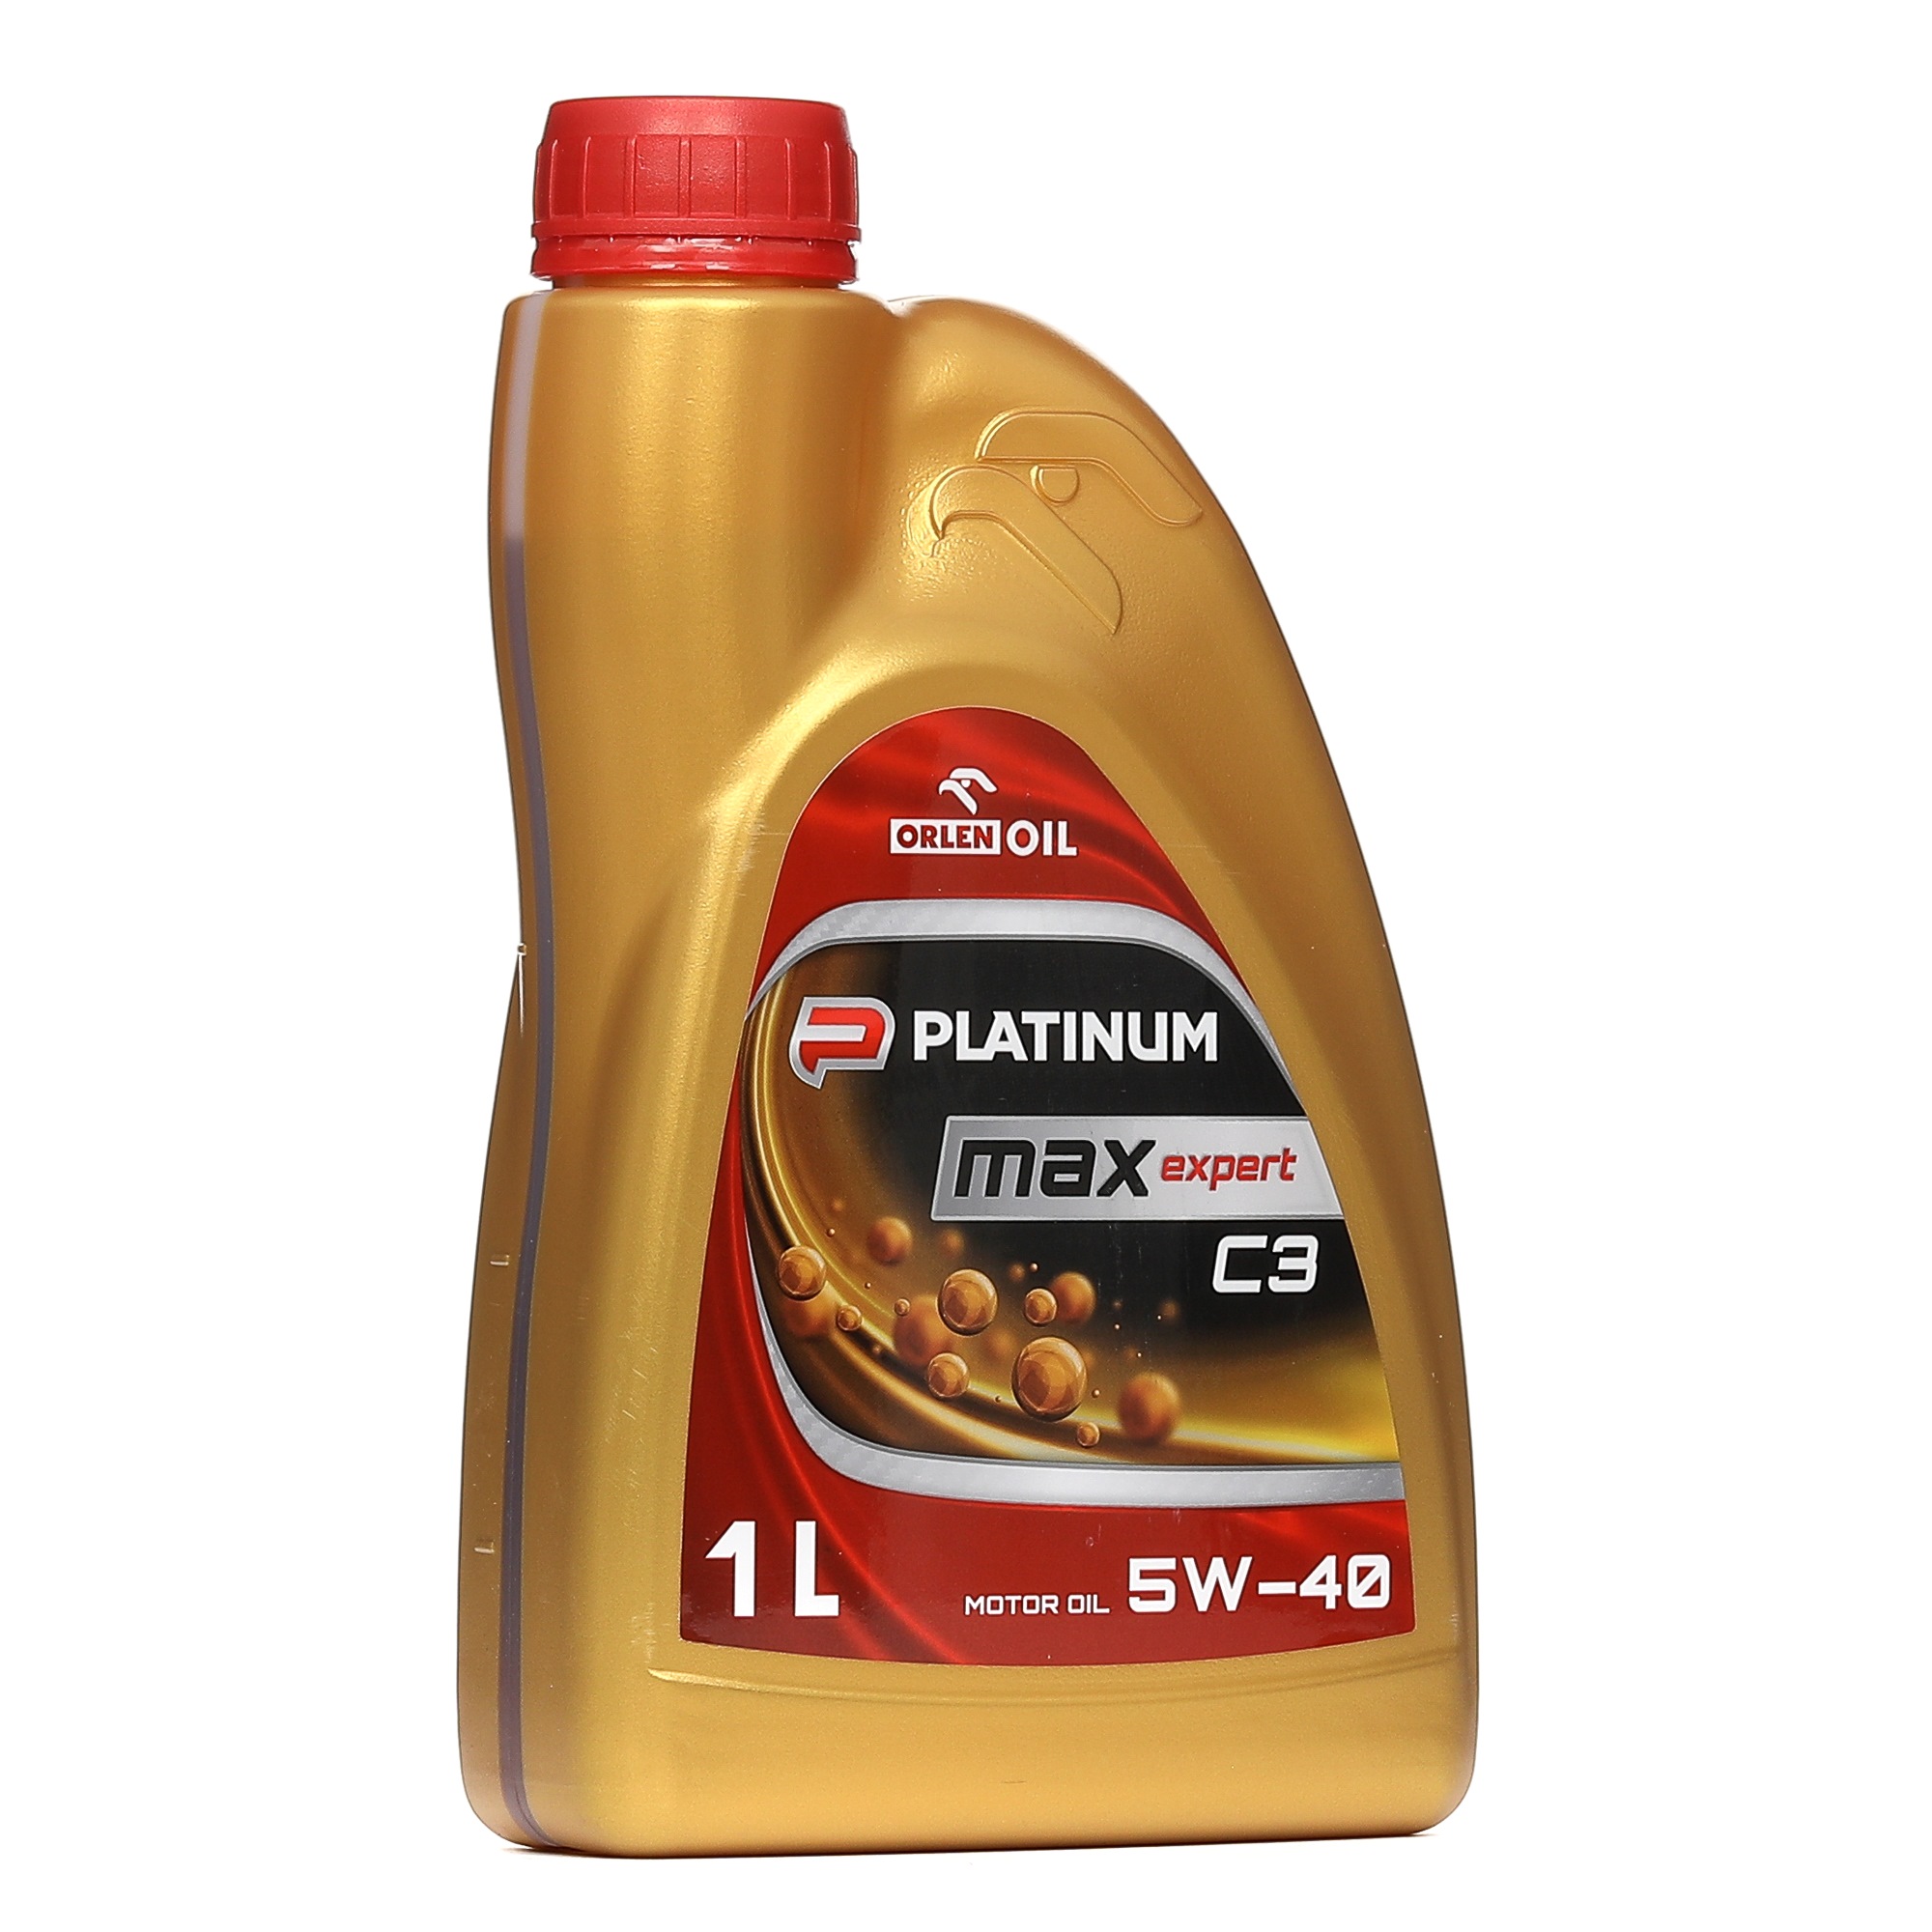 ORLEN PLATINUM MaxExpert, C3 QFS430B10 Engine oil 5W-40, 1l, Synthetic Oil